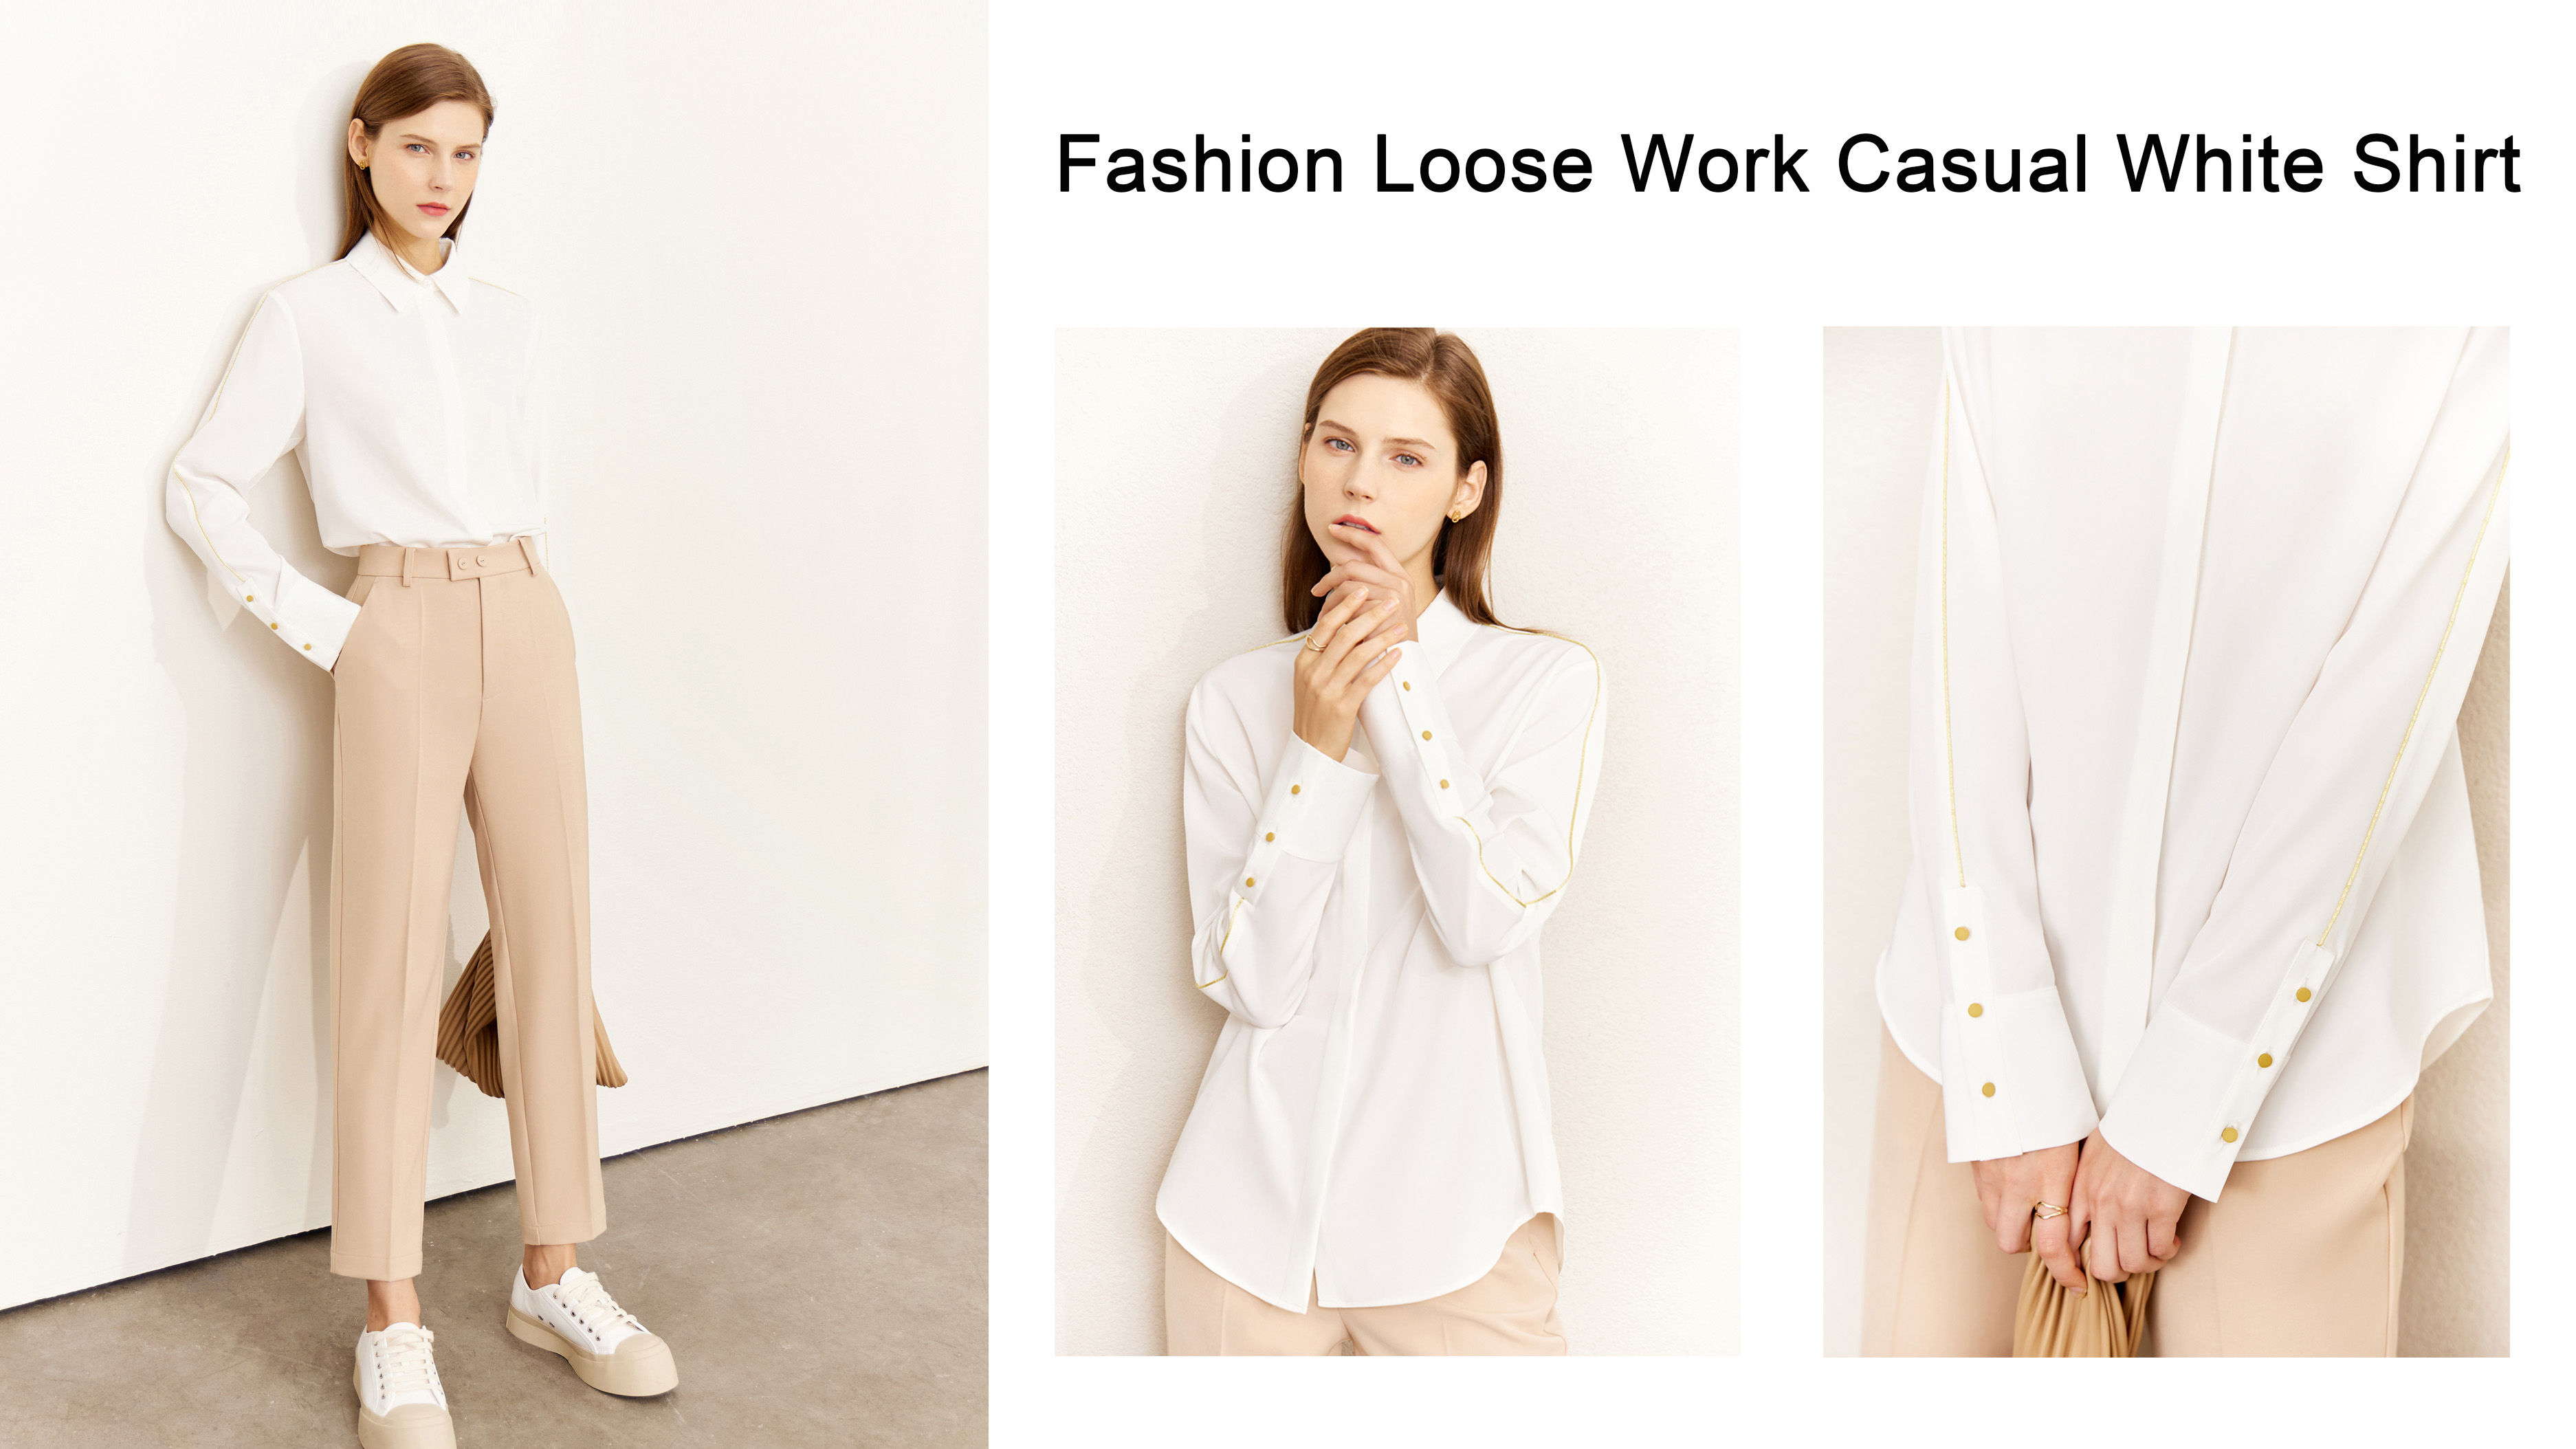 Quality Fashion Loose Work Casual White Shirt Manufacturer |Auschalink